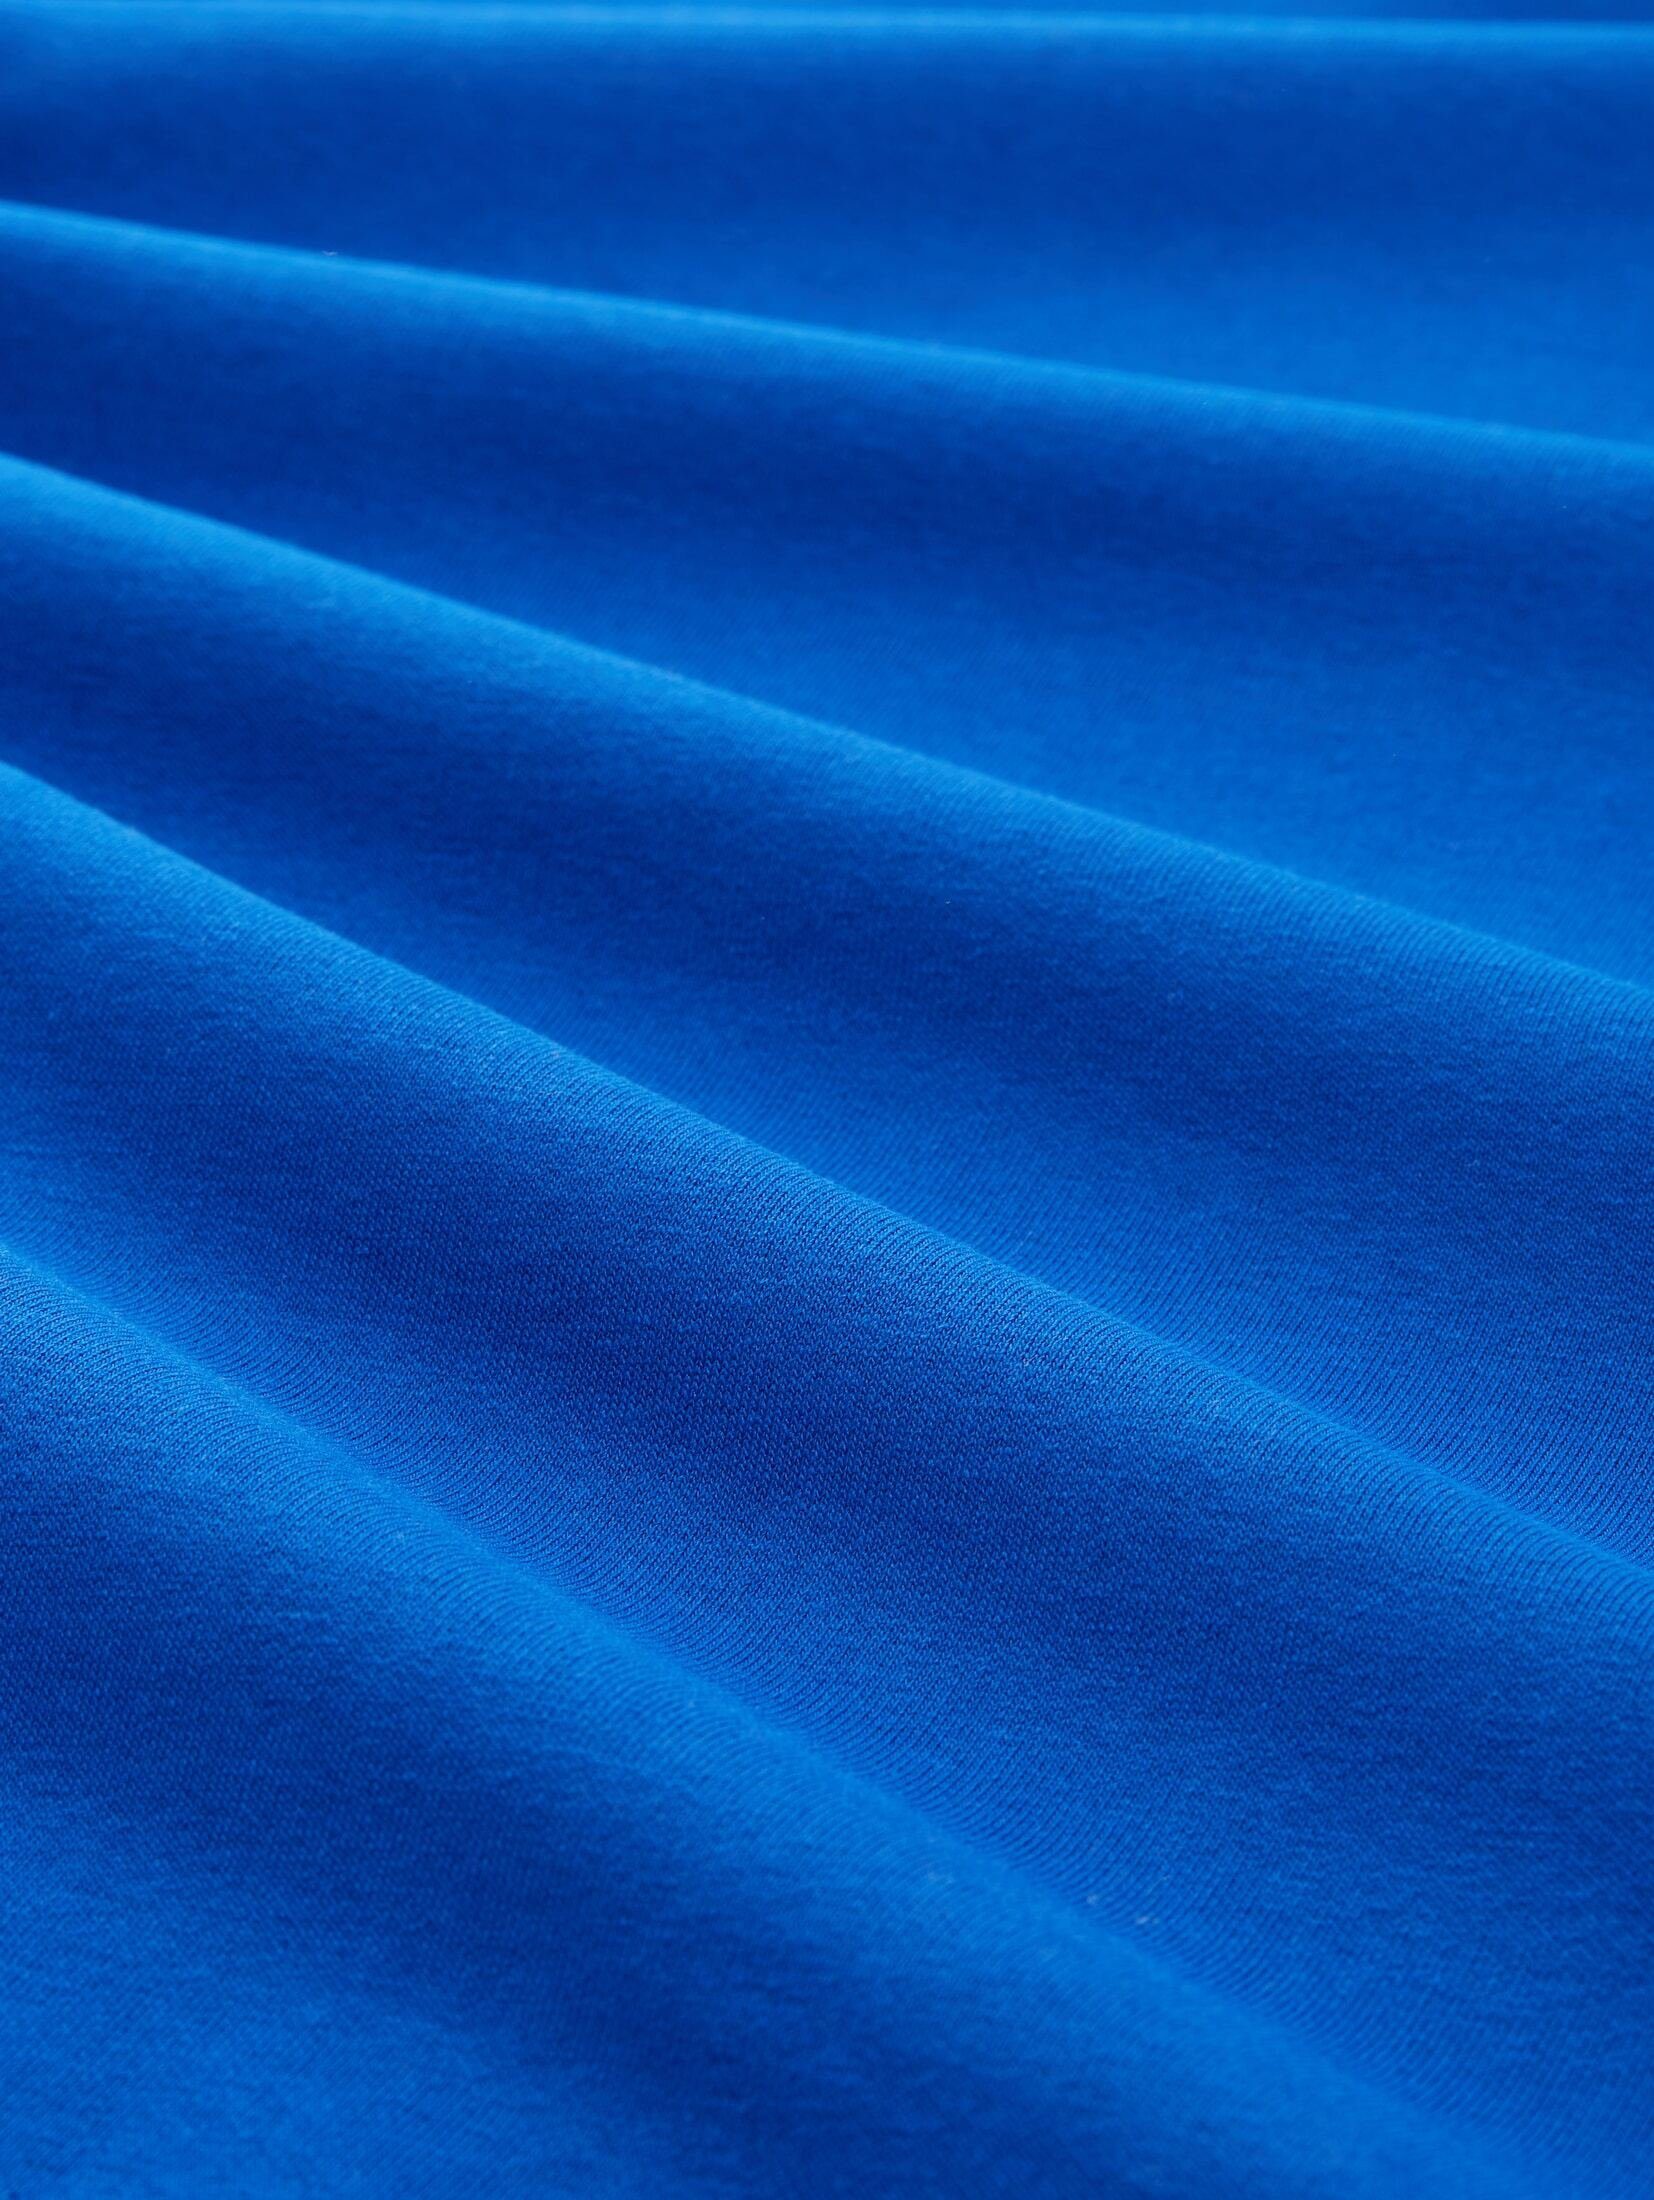 TAILOR Sweatshirt TOM Logo Denim royal mit blue shiny Hoodie Print